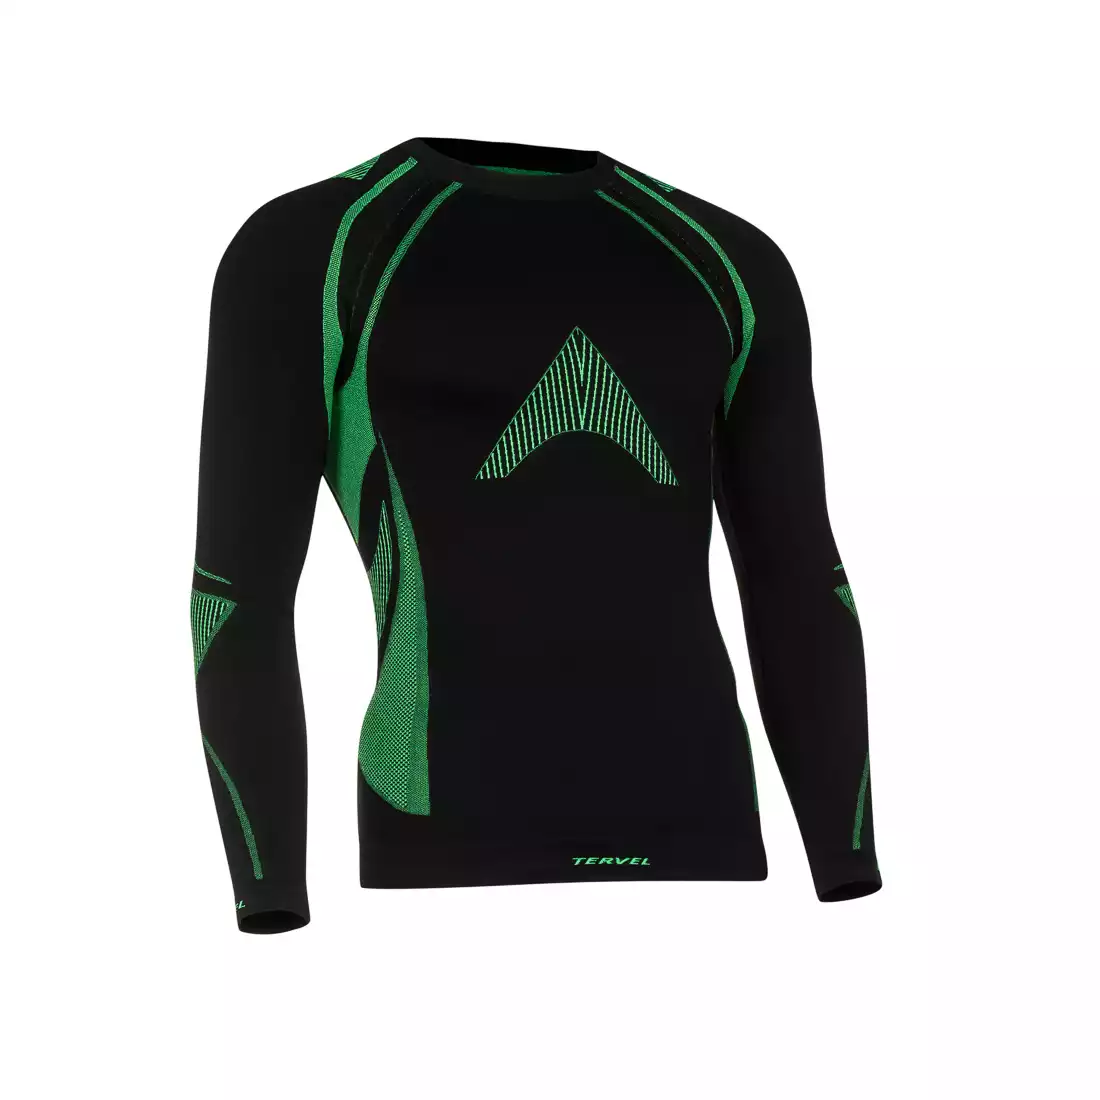 TERVEL - OPTILINE MOD-02 - męska koszulka termoaktywna z długim rękawem, kolor: Czarno-zielony